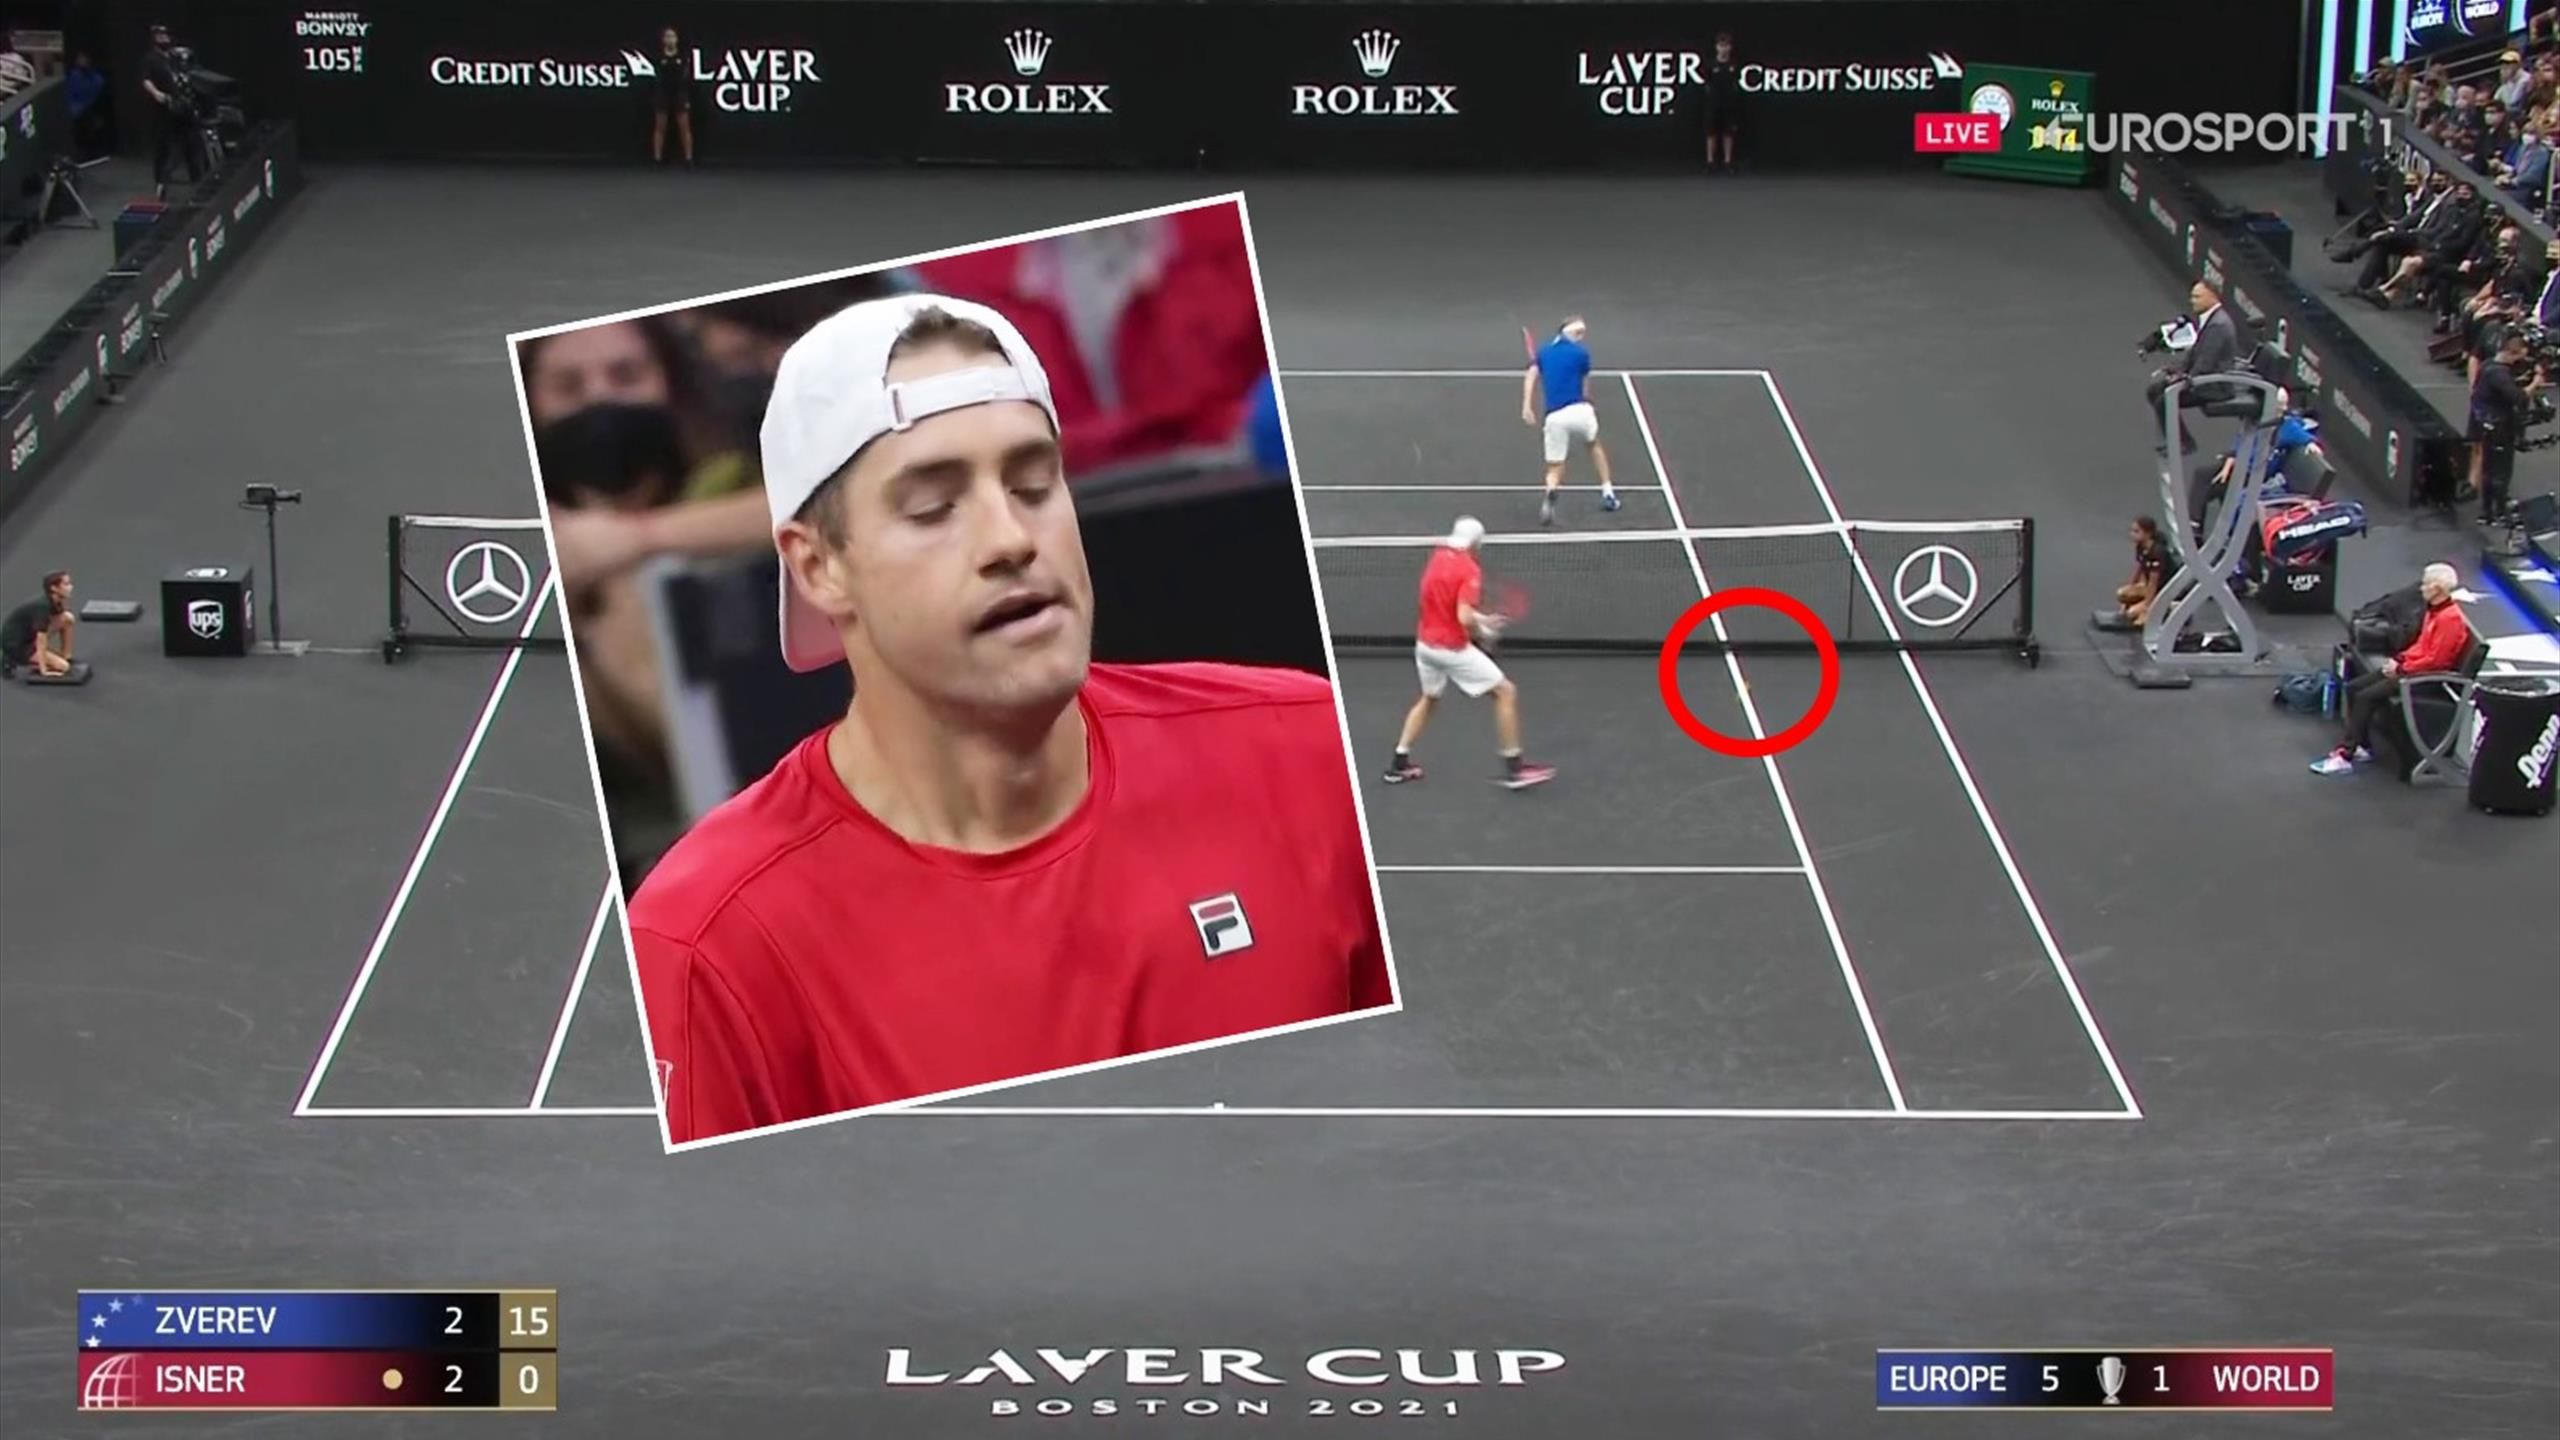 Laver Cup 2021 - Why did John Isner stop?! - Disbelief as Alexander Zverev wins bizarre point - Tennis video